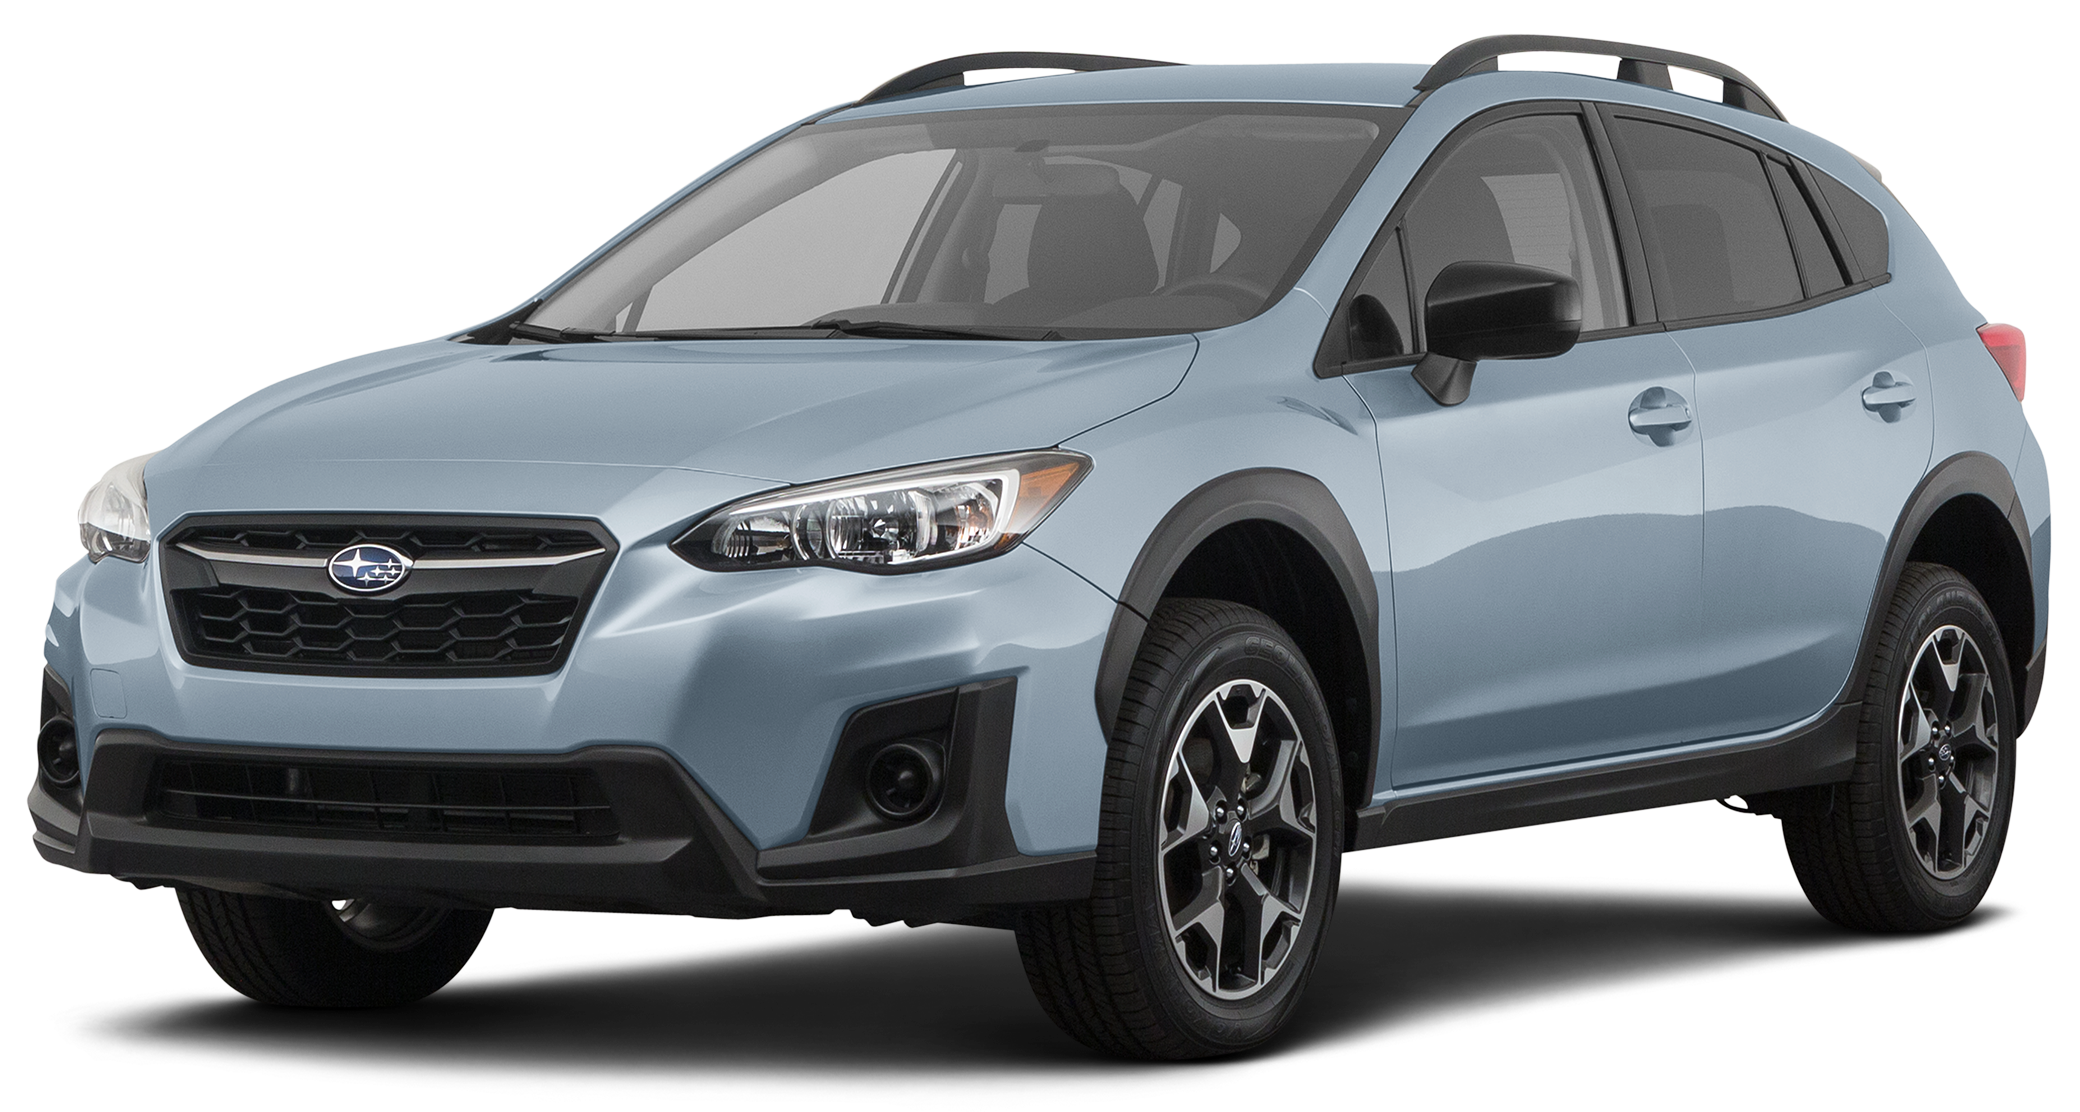 2020 Subaru Crosstrek Incentives, Specials & Offers in Winston-Salem NC